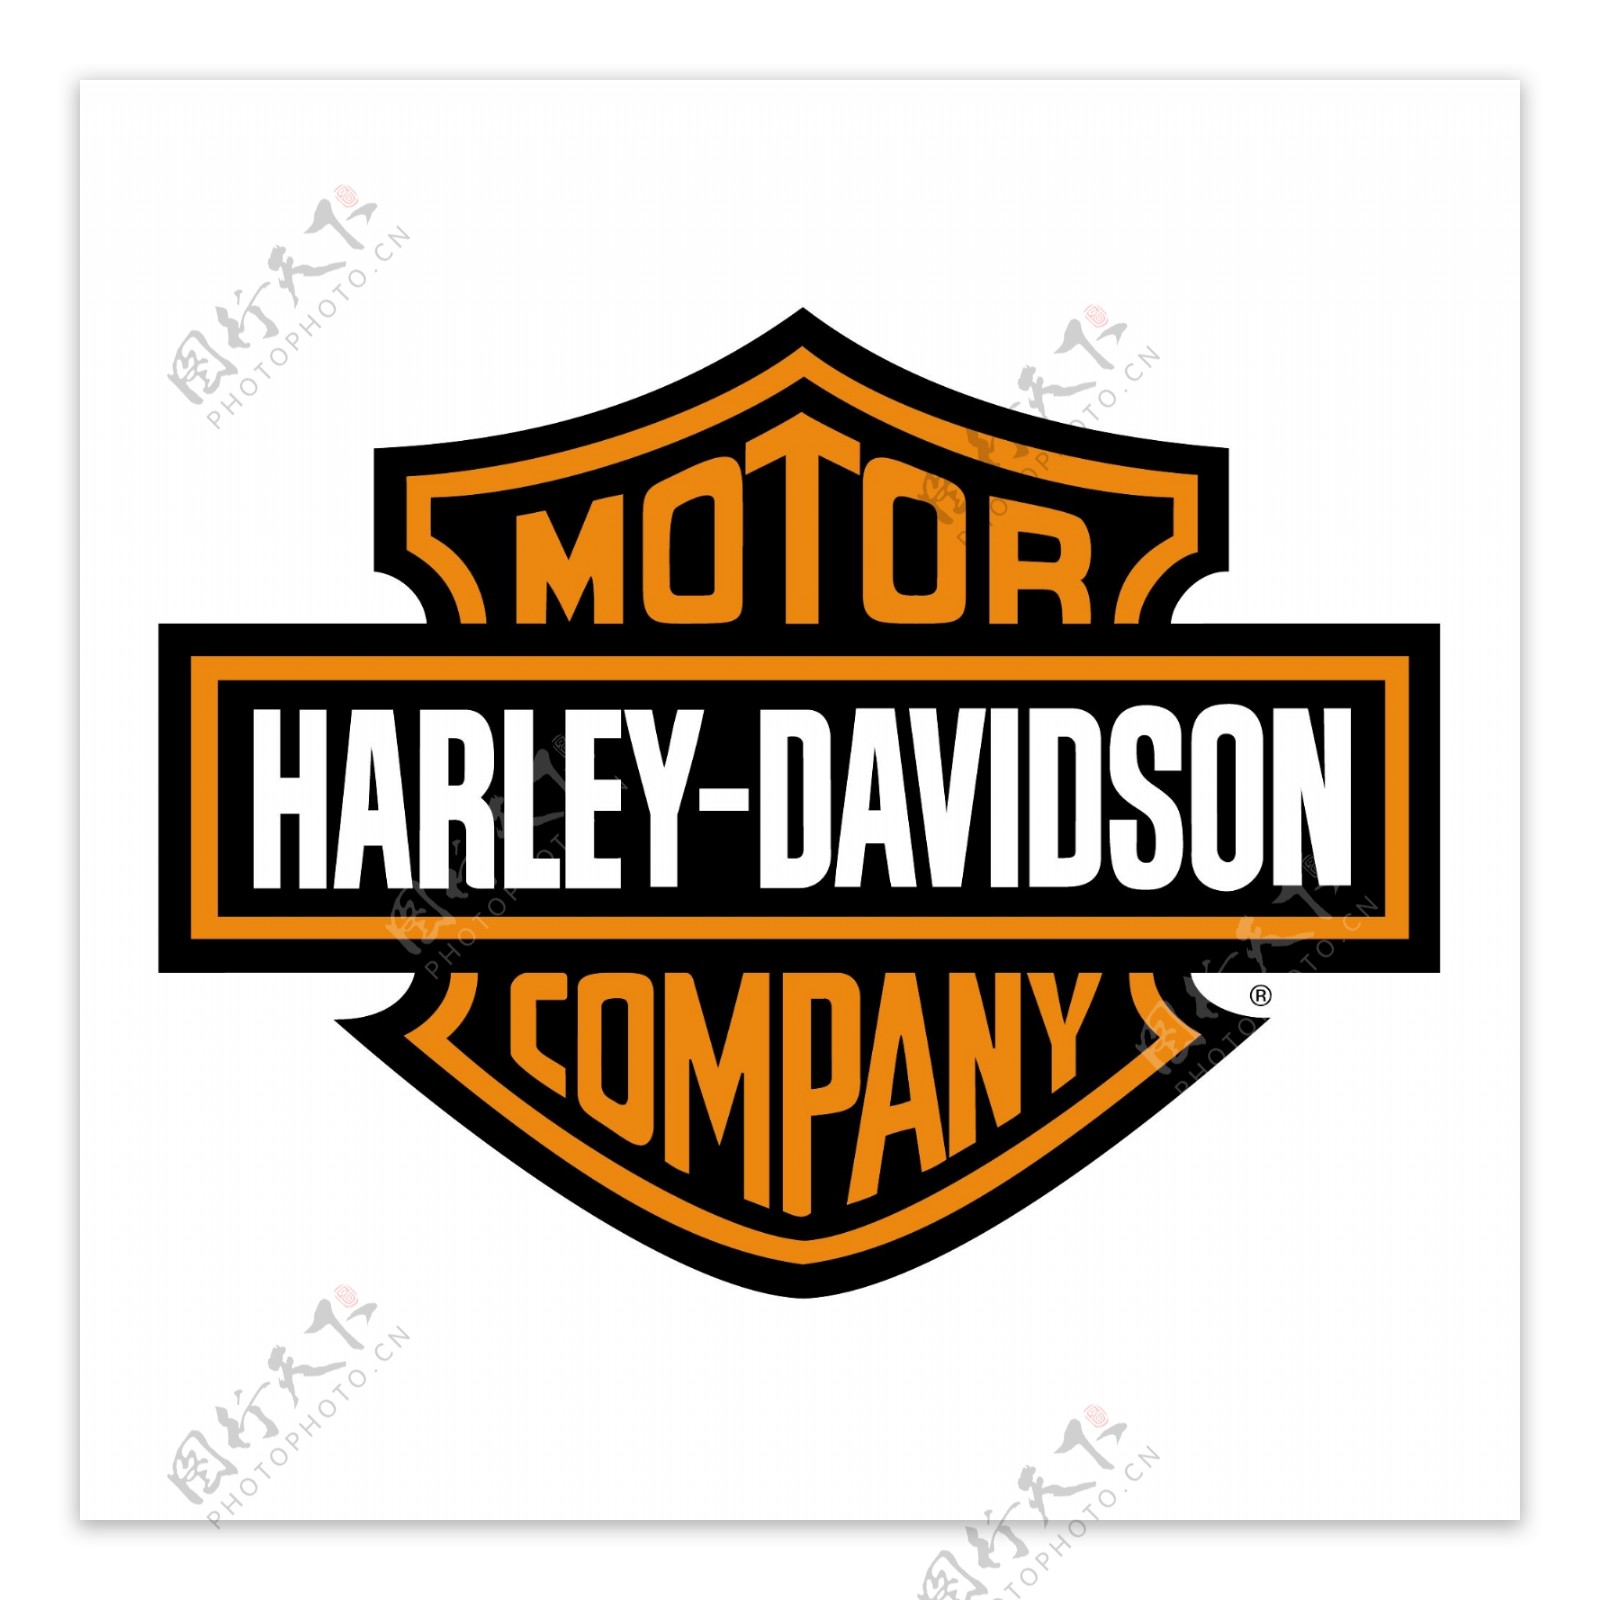 HarleyDavidson哈雷戴维森摩托车标志